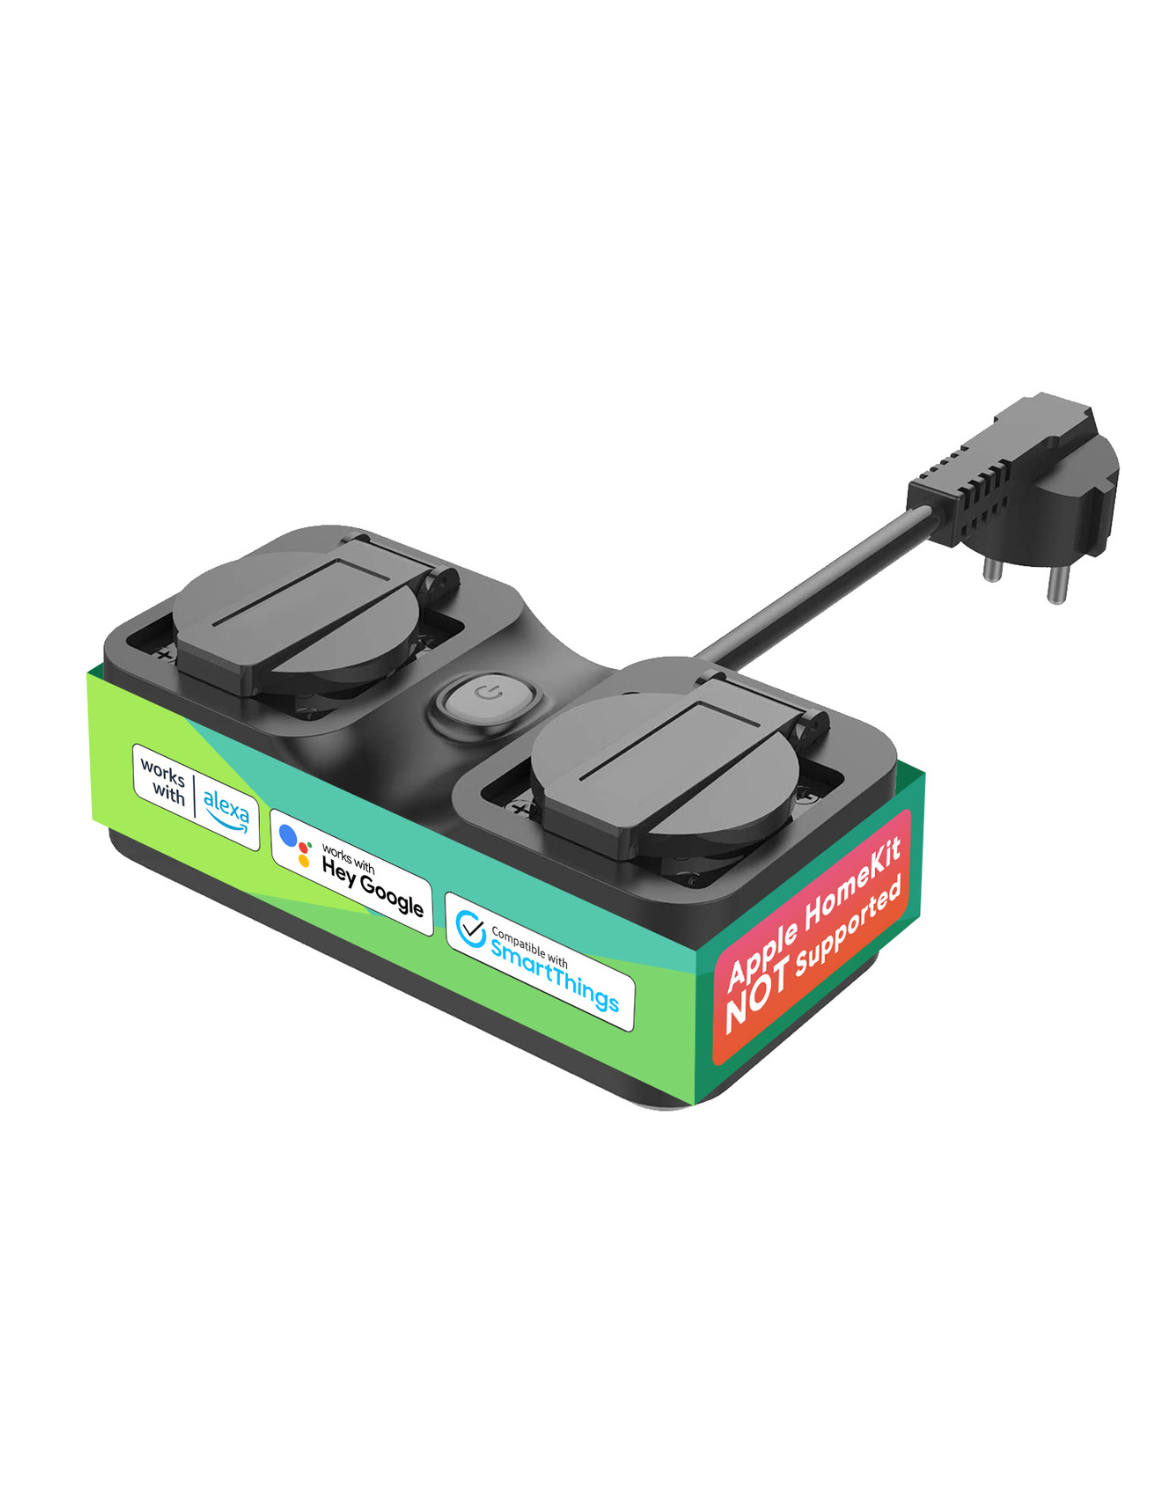 Meross Outdoor Smart Plug, MSS620 (EU Version)